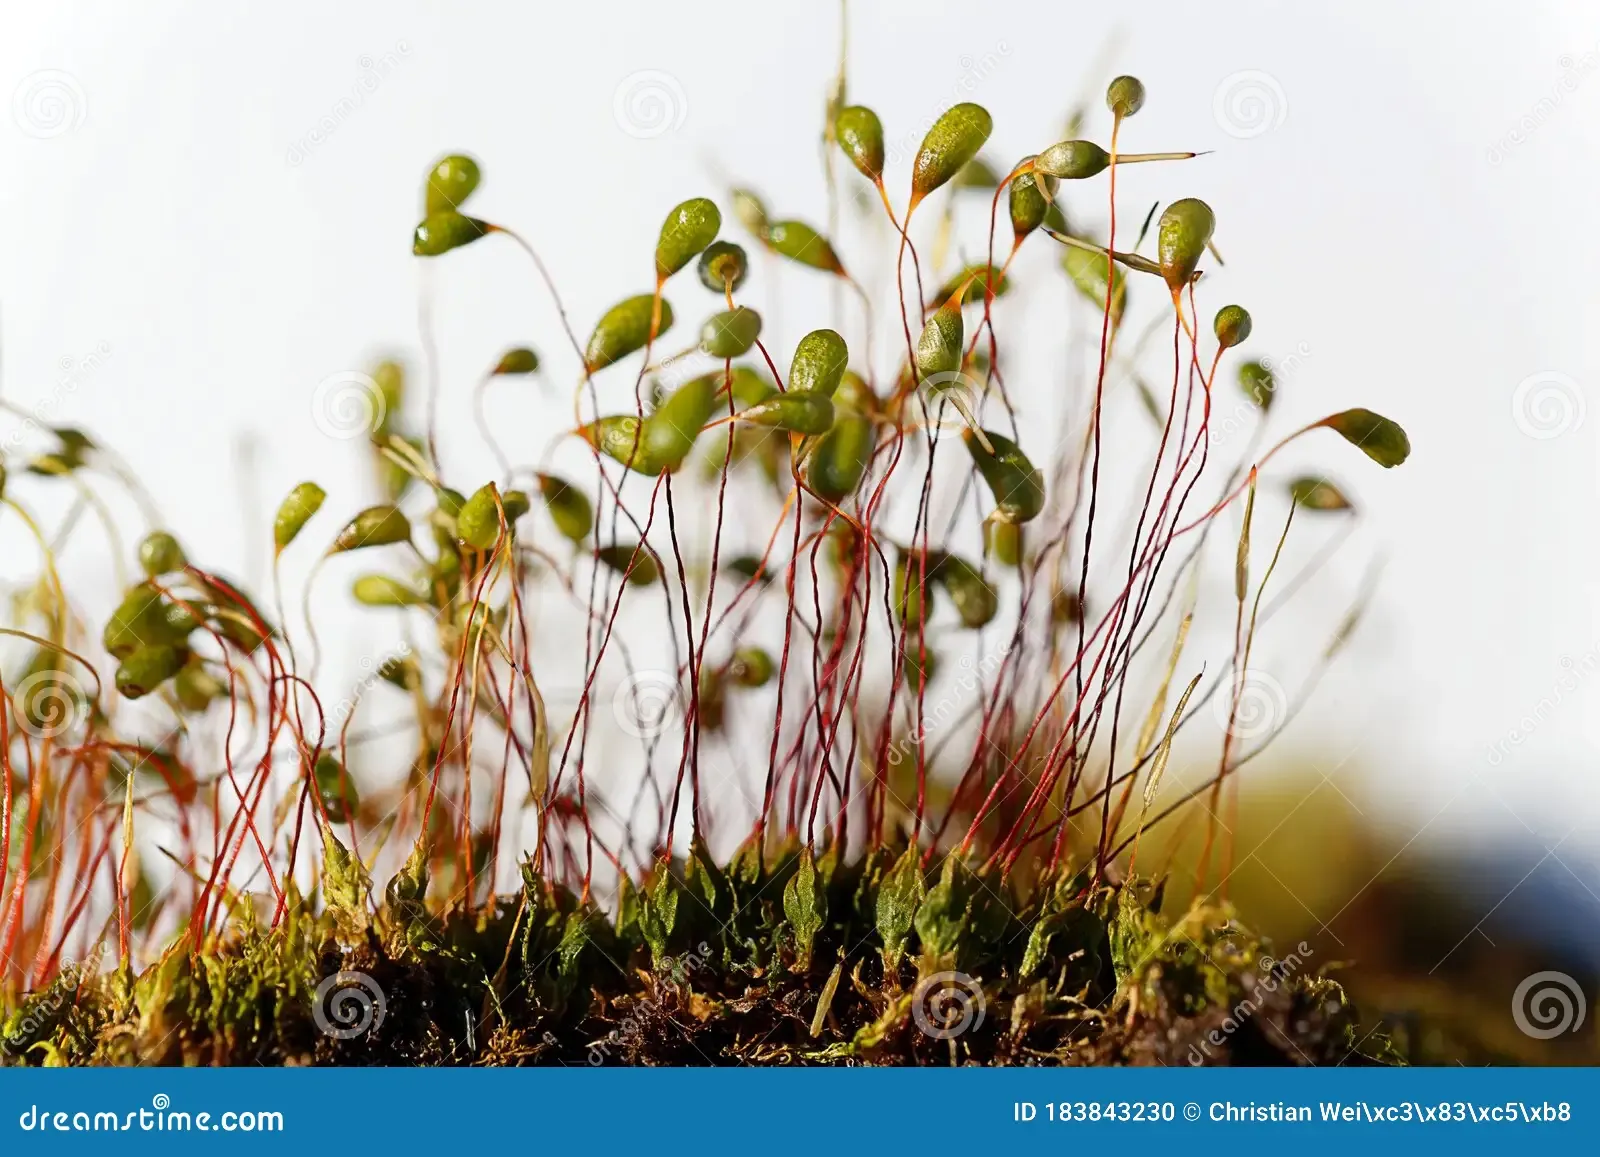 macro-photo-sporophytes-bryum-moss-macro-photo-sporophytes-bryum-moss-white-background-183843230.jpg